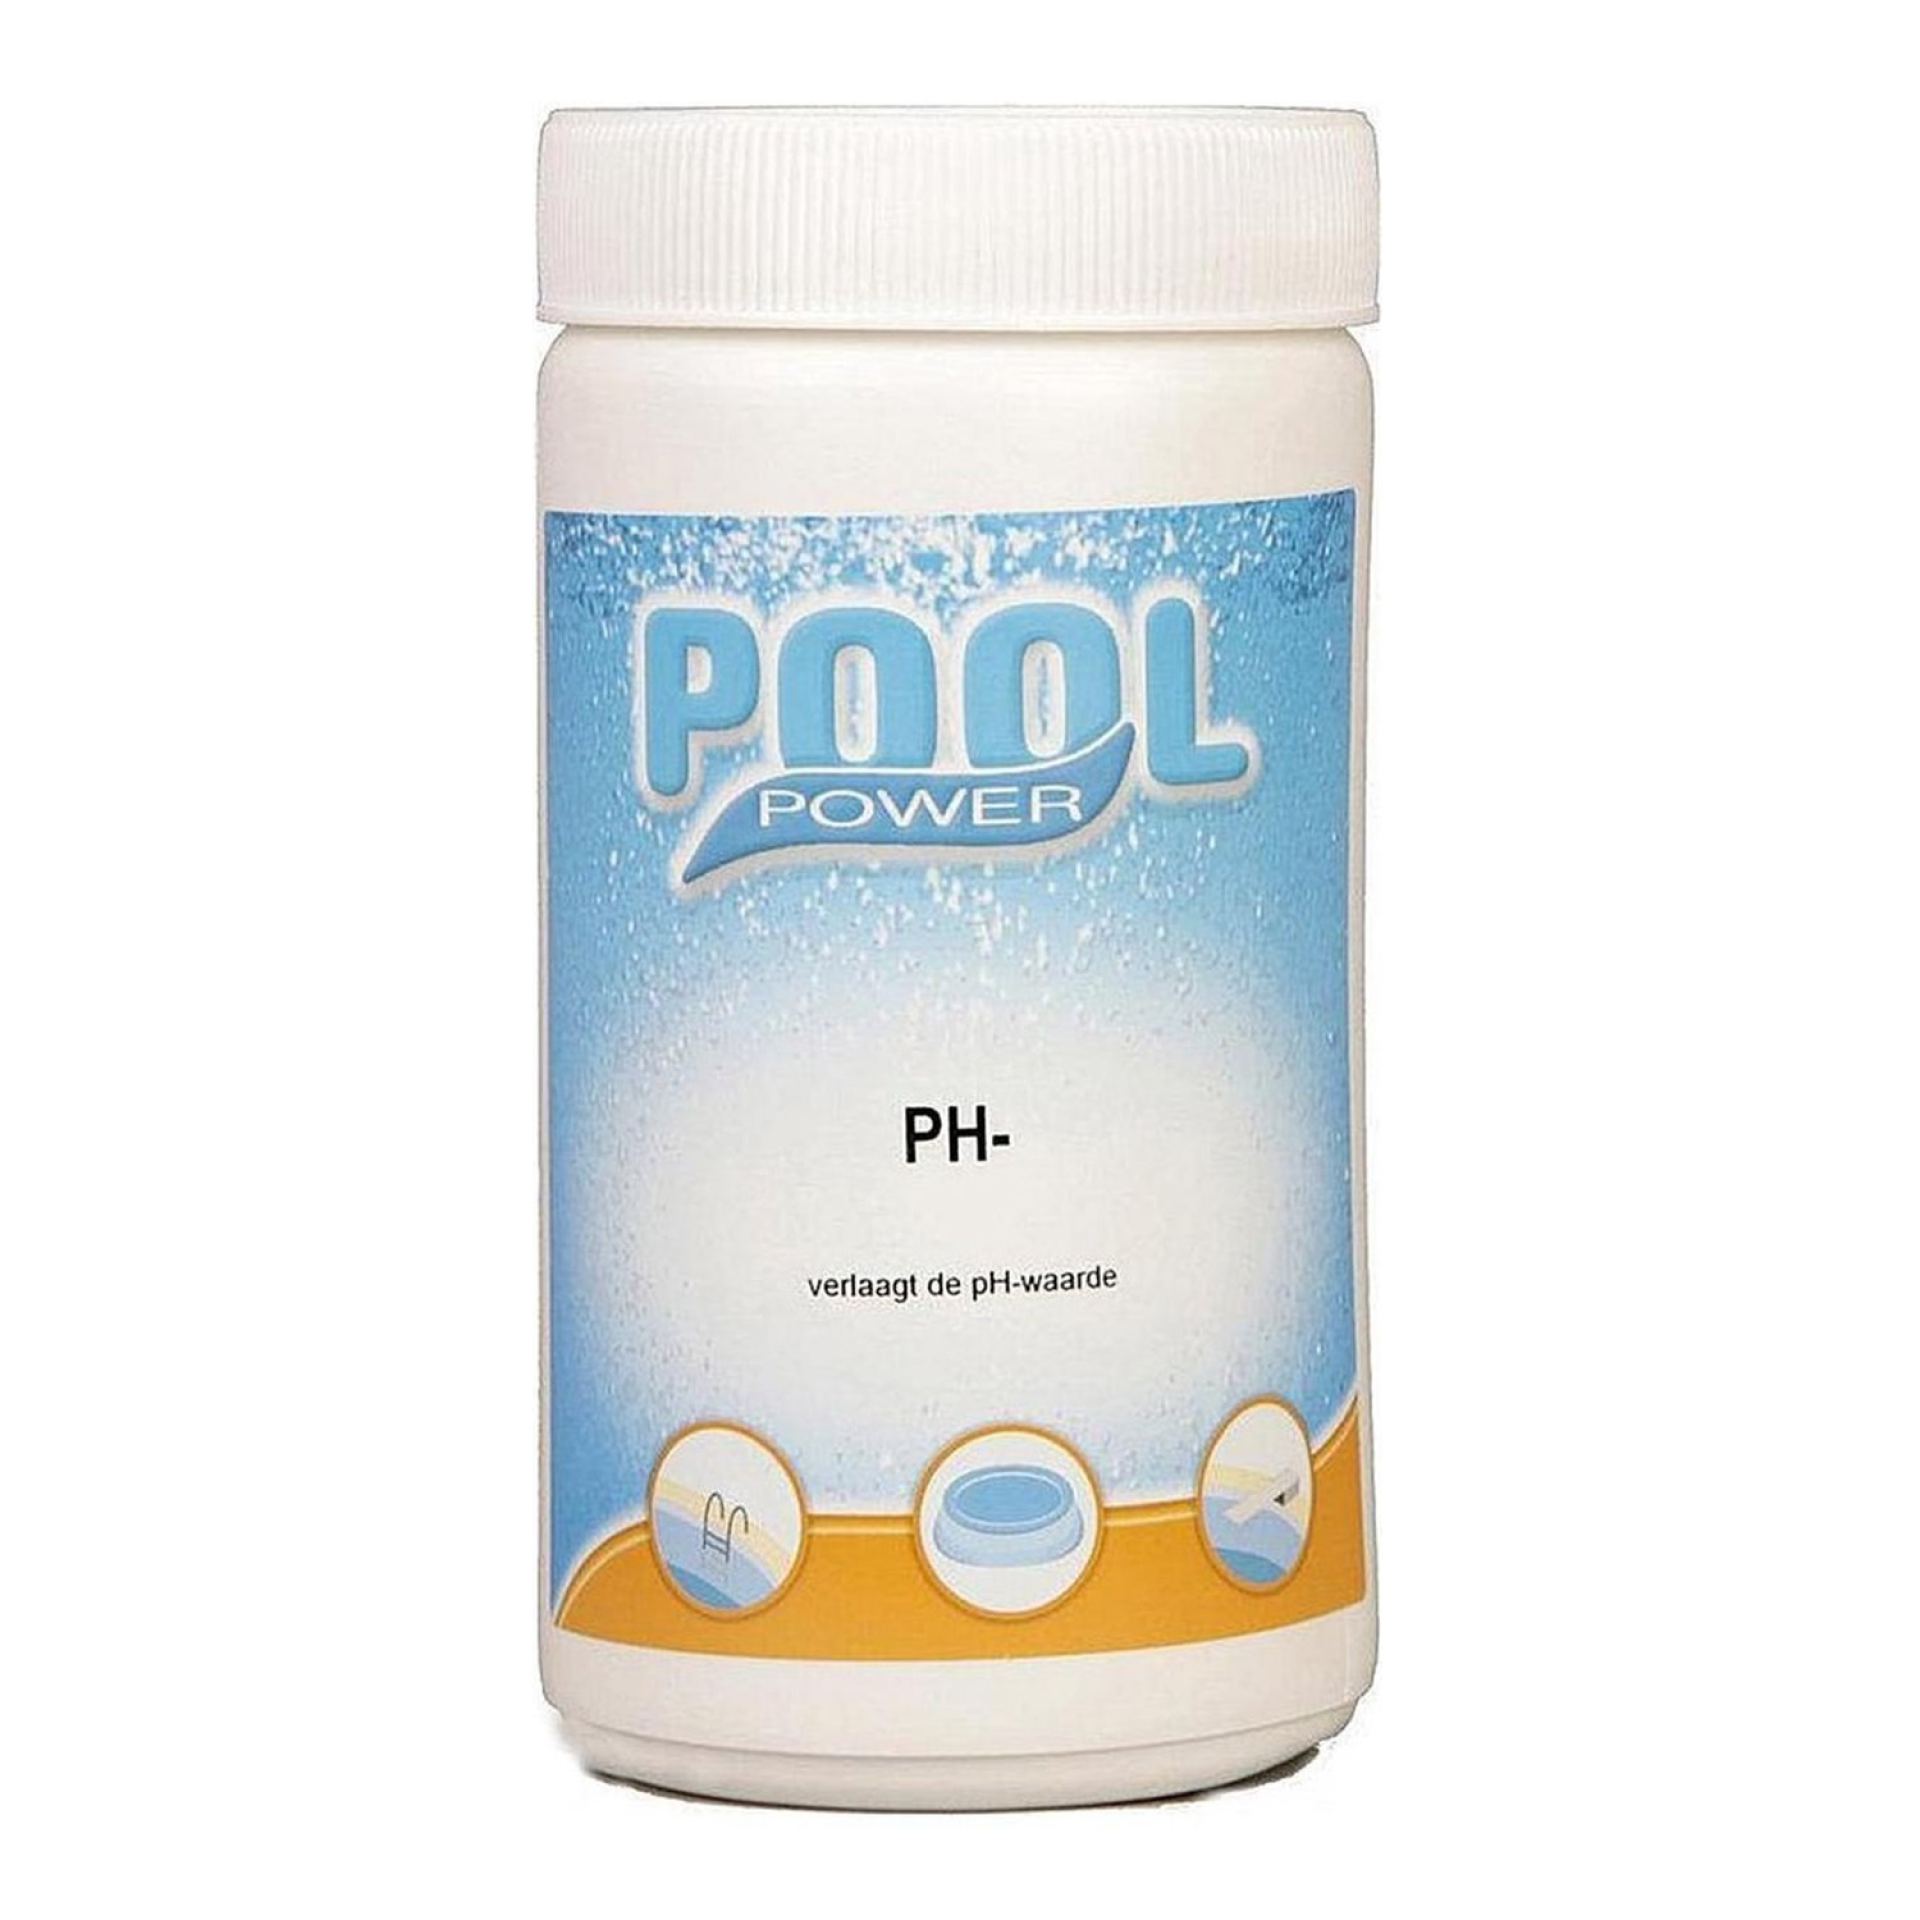 Pool power PH- 1,5kg bestellen